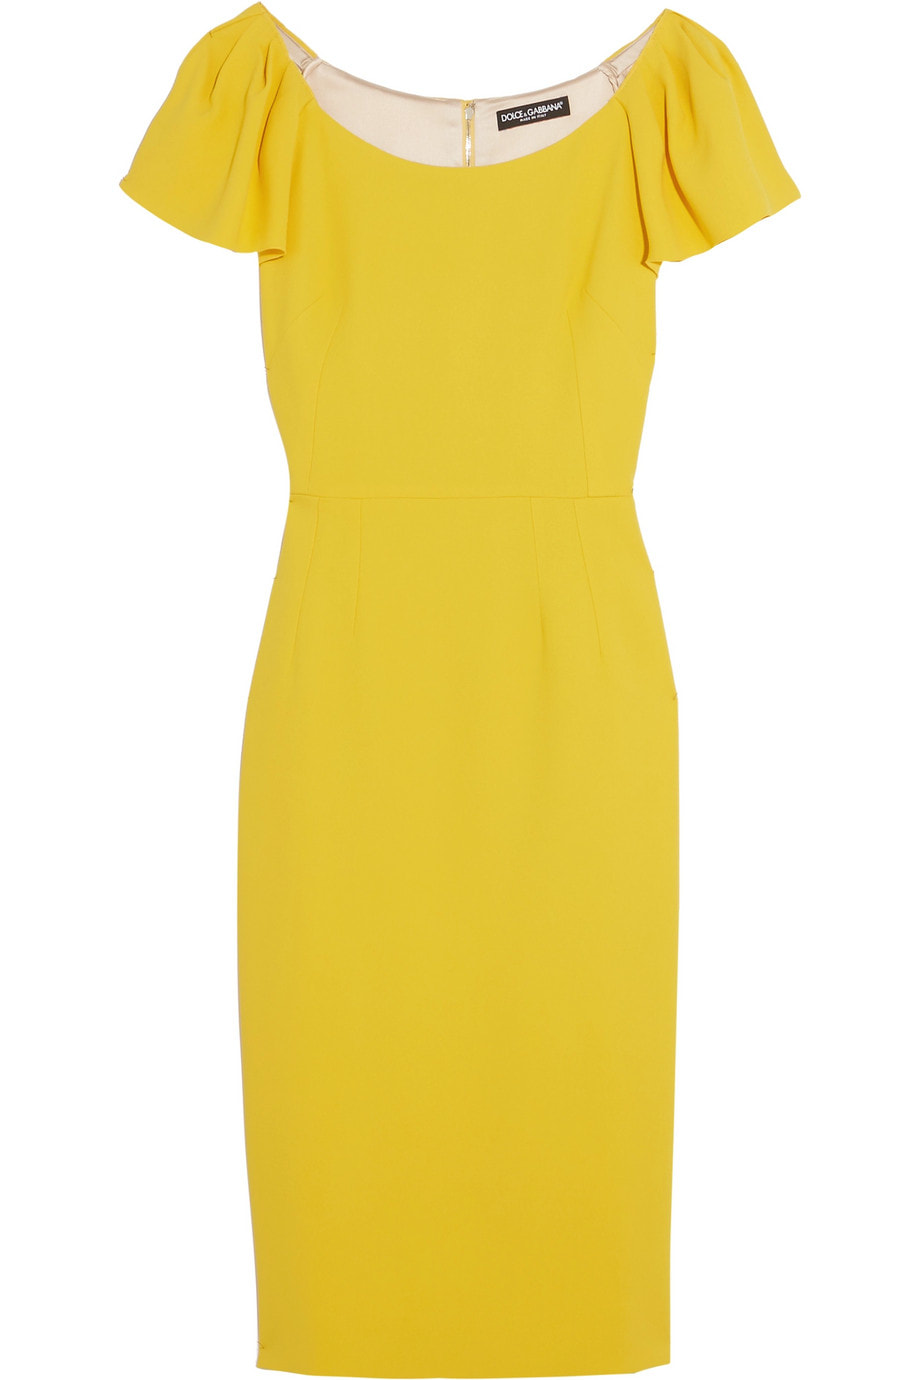 Dolce & Gabbana Resort '17 yellow crepe dress